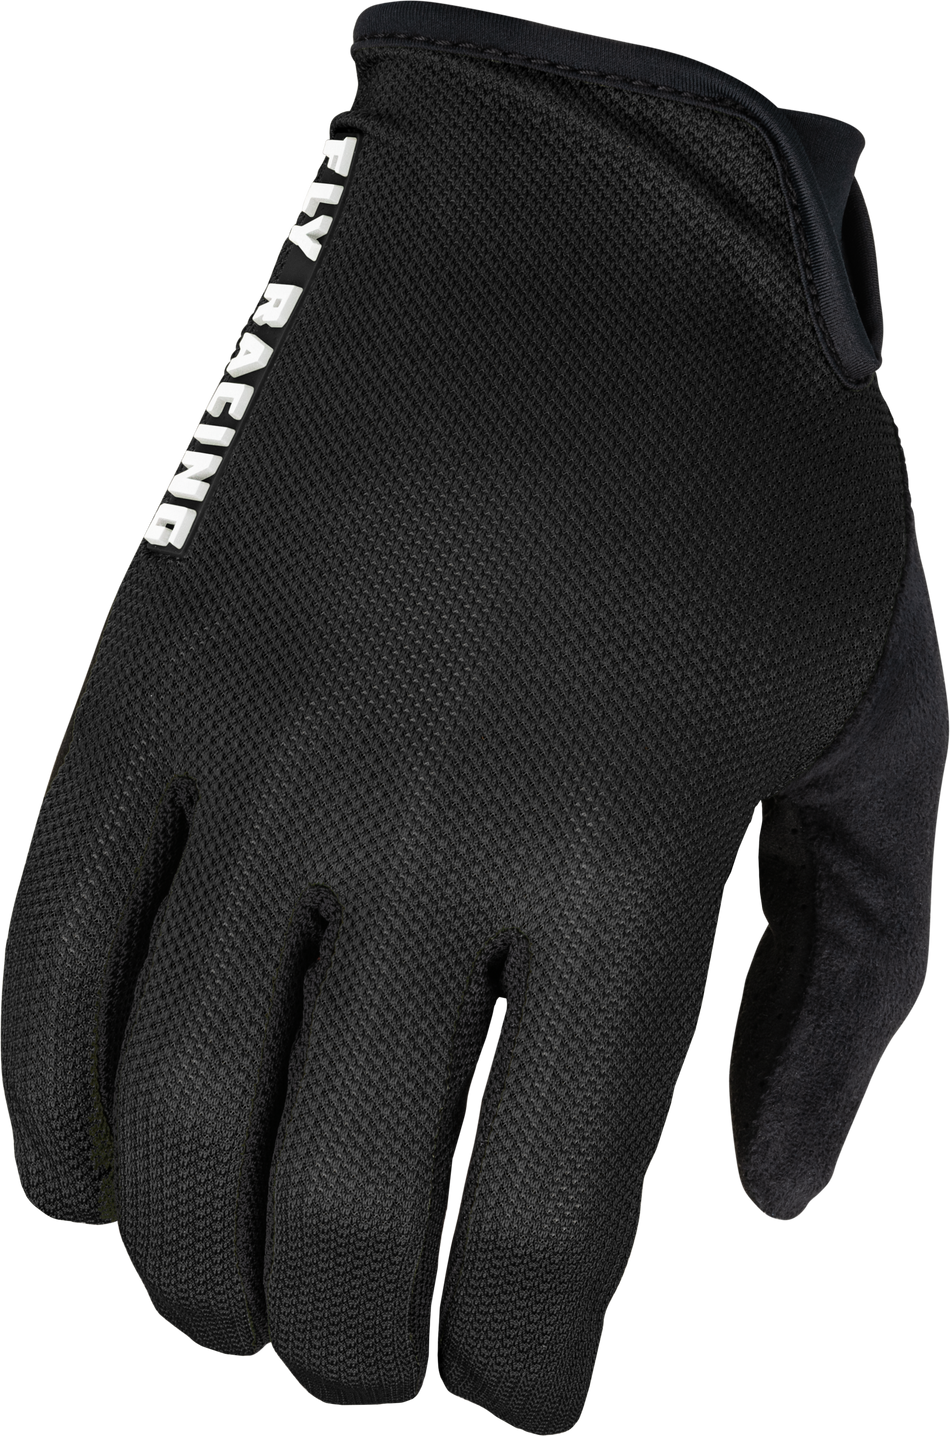 FLY RACING Mesh Gloves Black Sm 375-300S